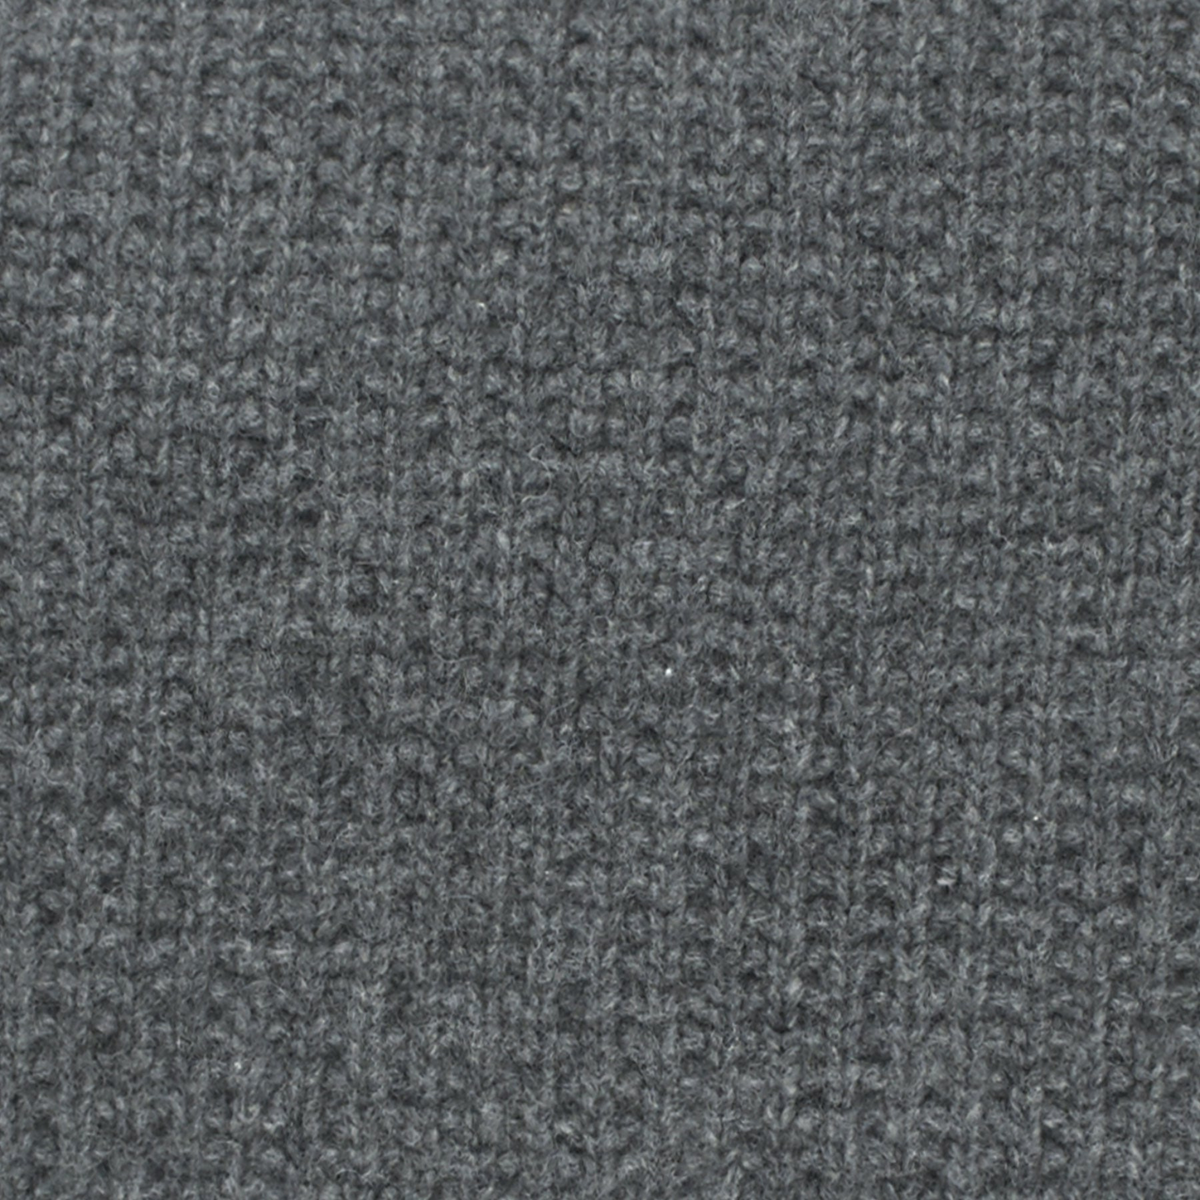 Swatch Sample of Sferra Pettra Throw Blanket in  Grey Color